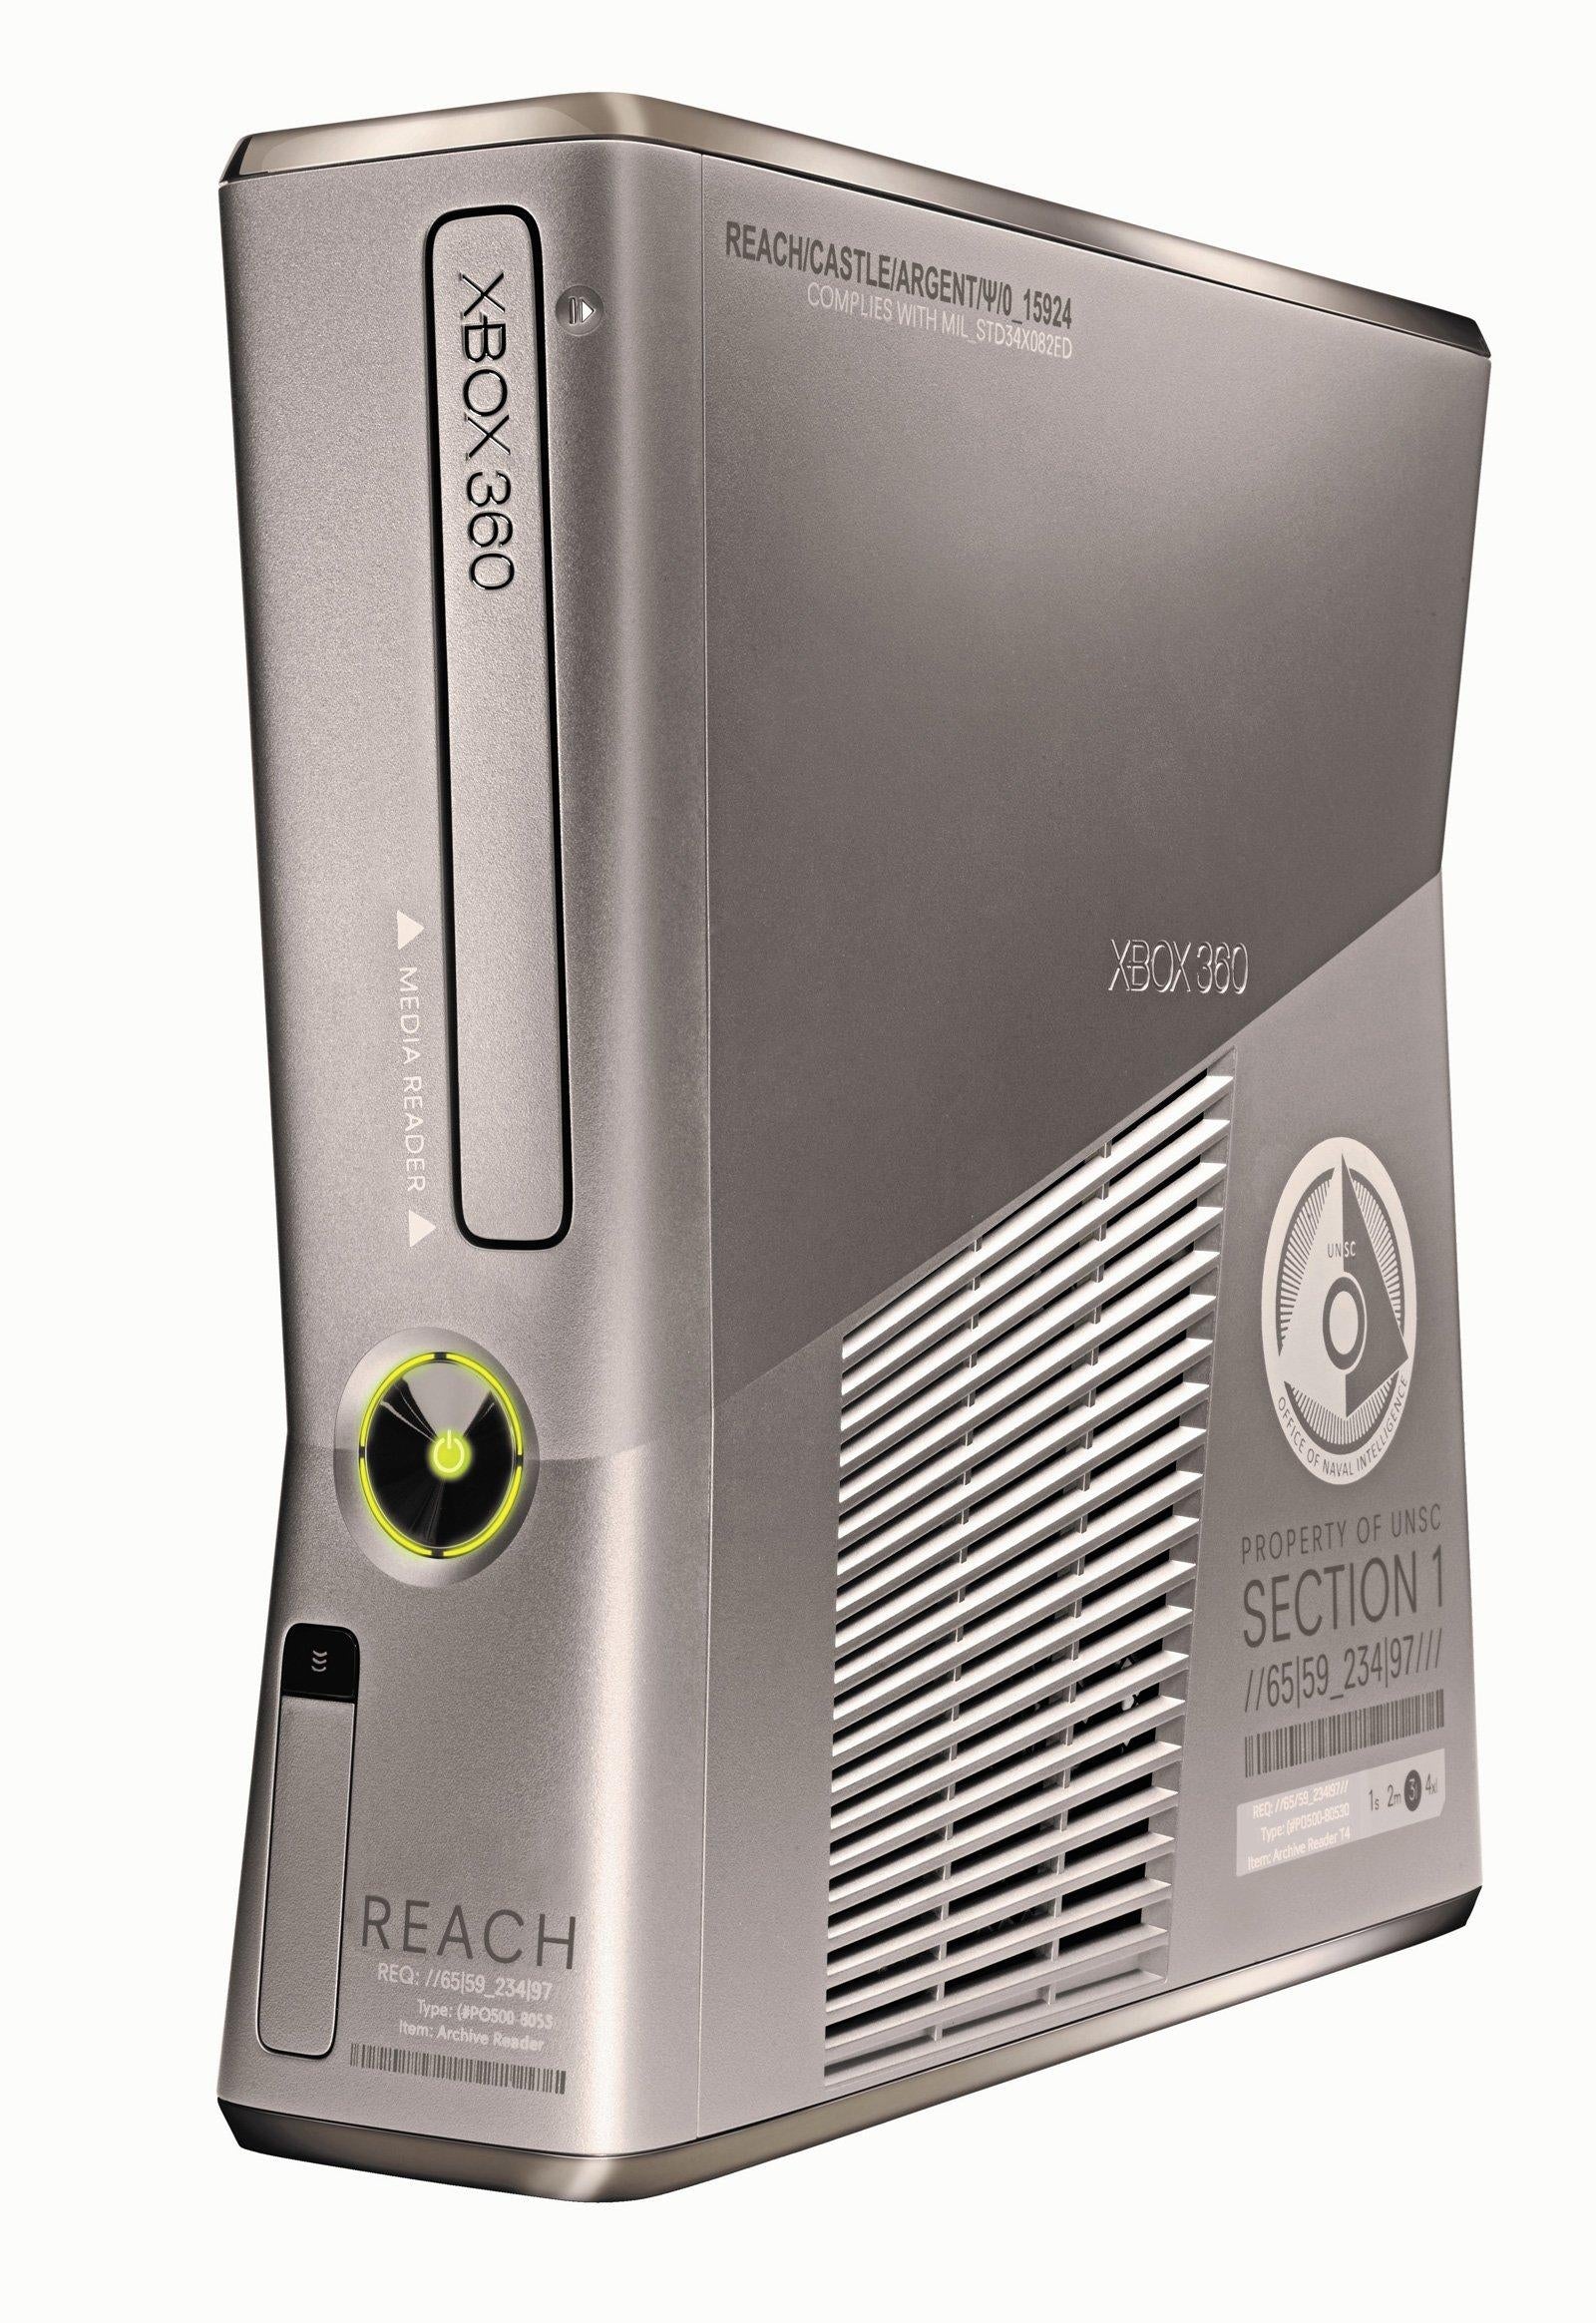 Xbox 360 Slim 250GB Console - Halo Reach Edition